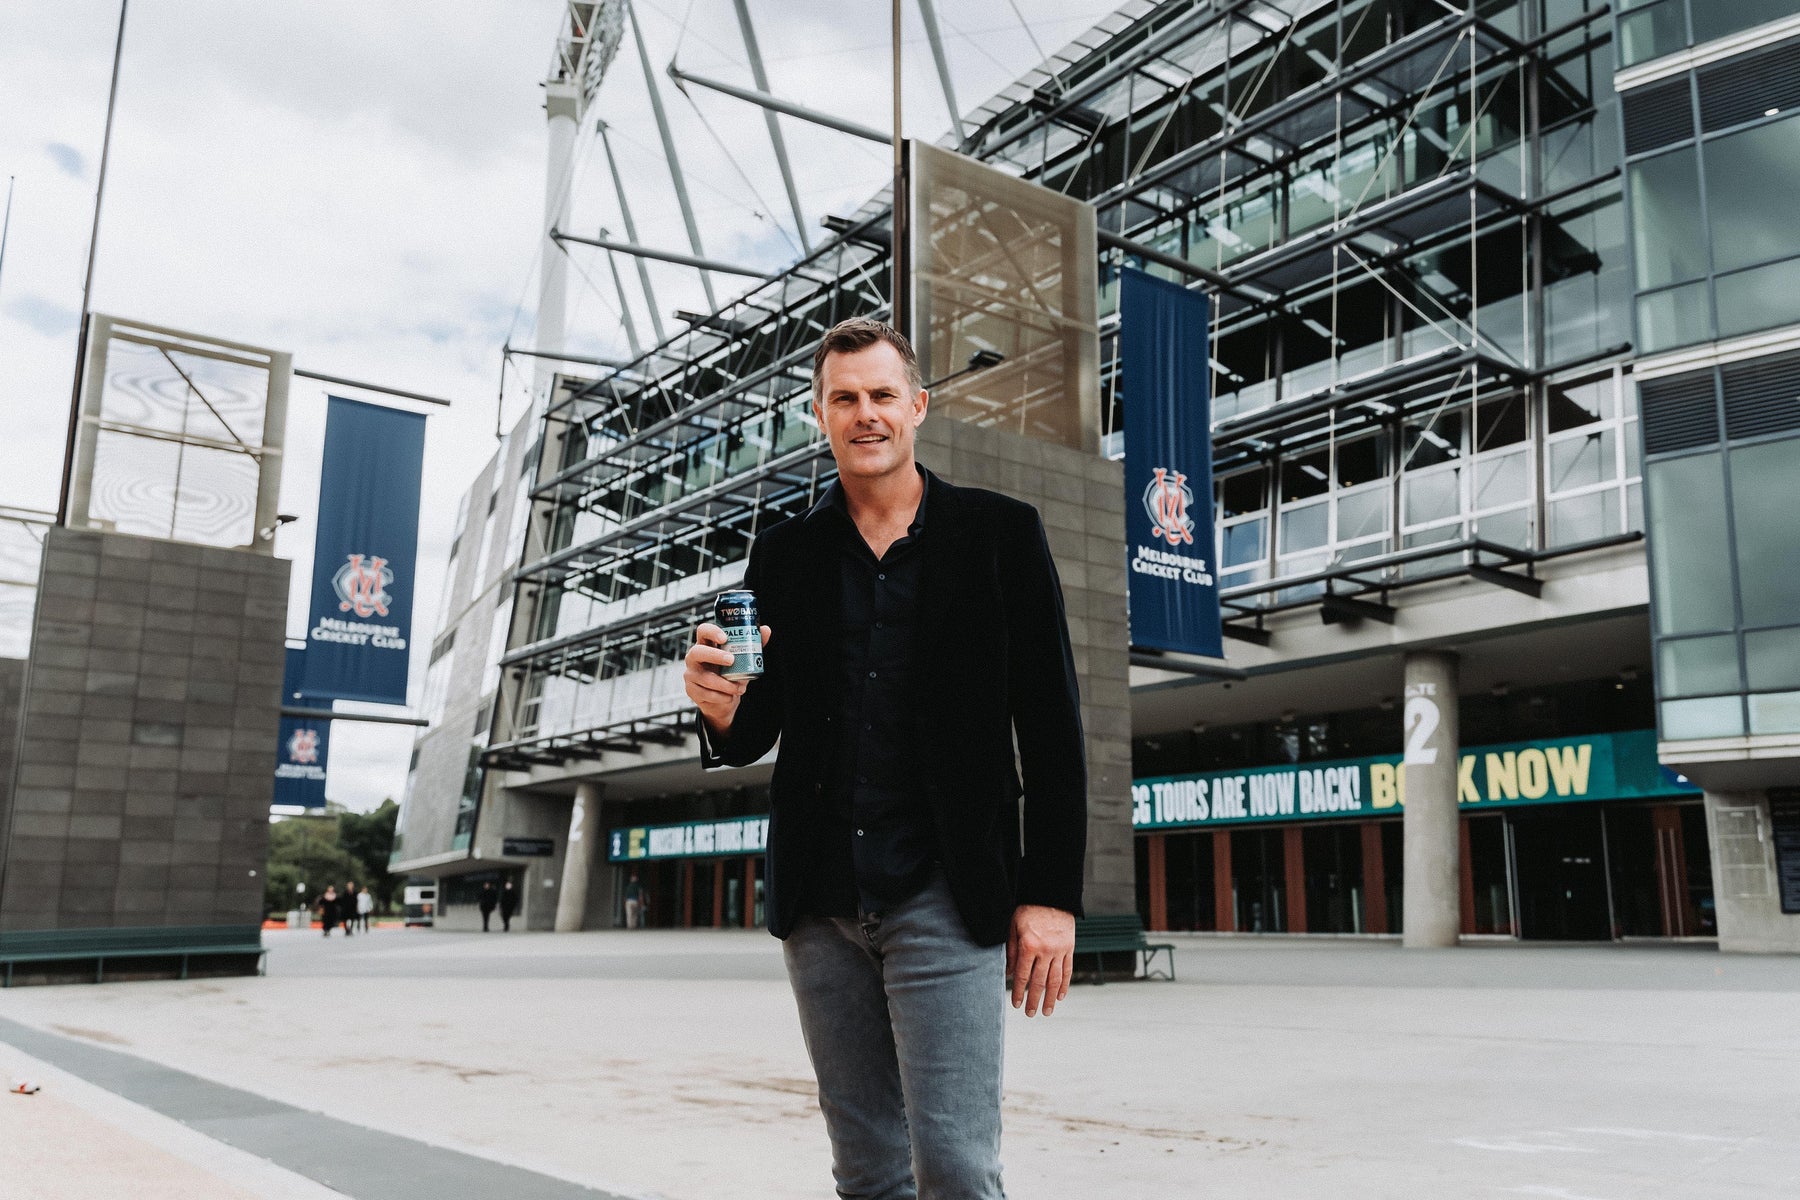 Gluten Free Beer at Australian stadiums: Melbourne's MCG